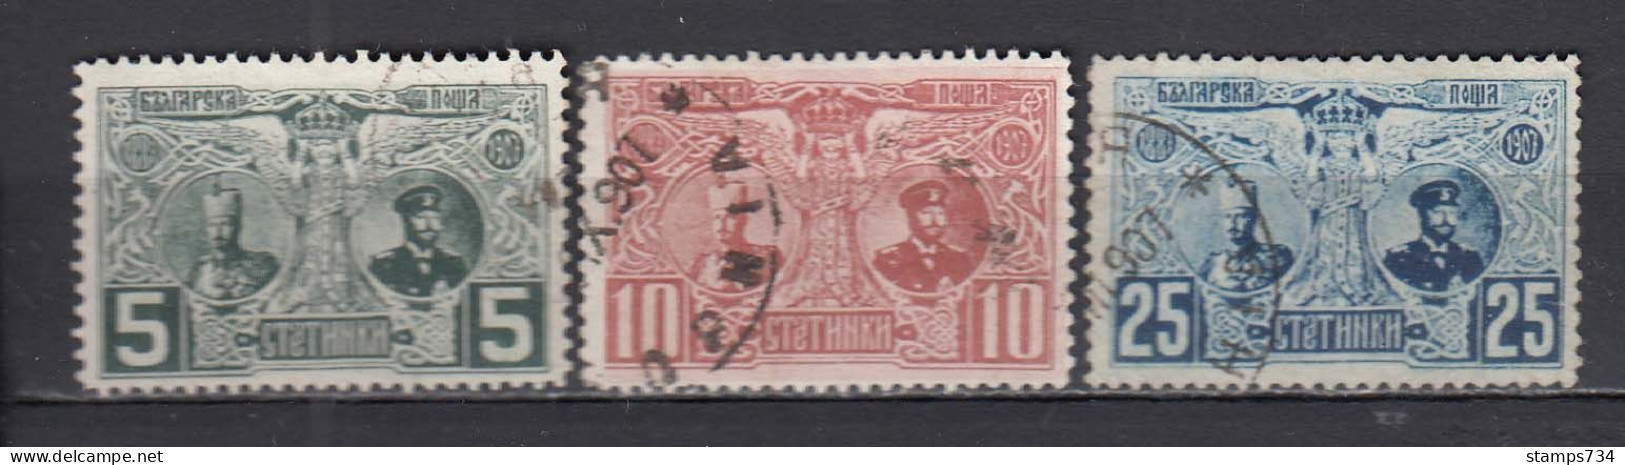 Bulgarie 1907 - 20 Ann. De Regne De Ferdinand I, YT 69-71, Obliteres - Gebruikt